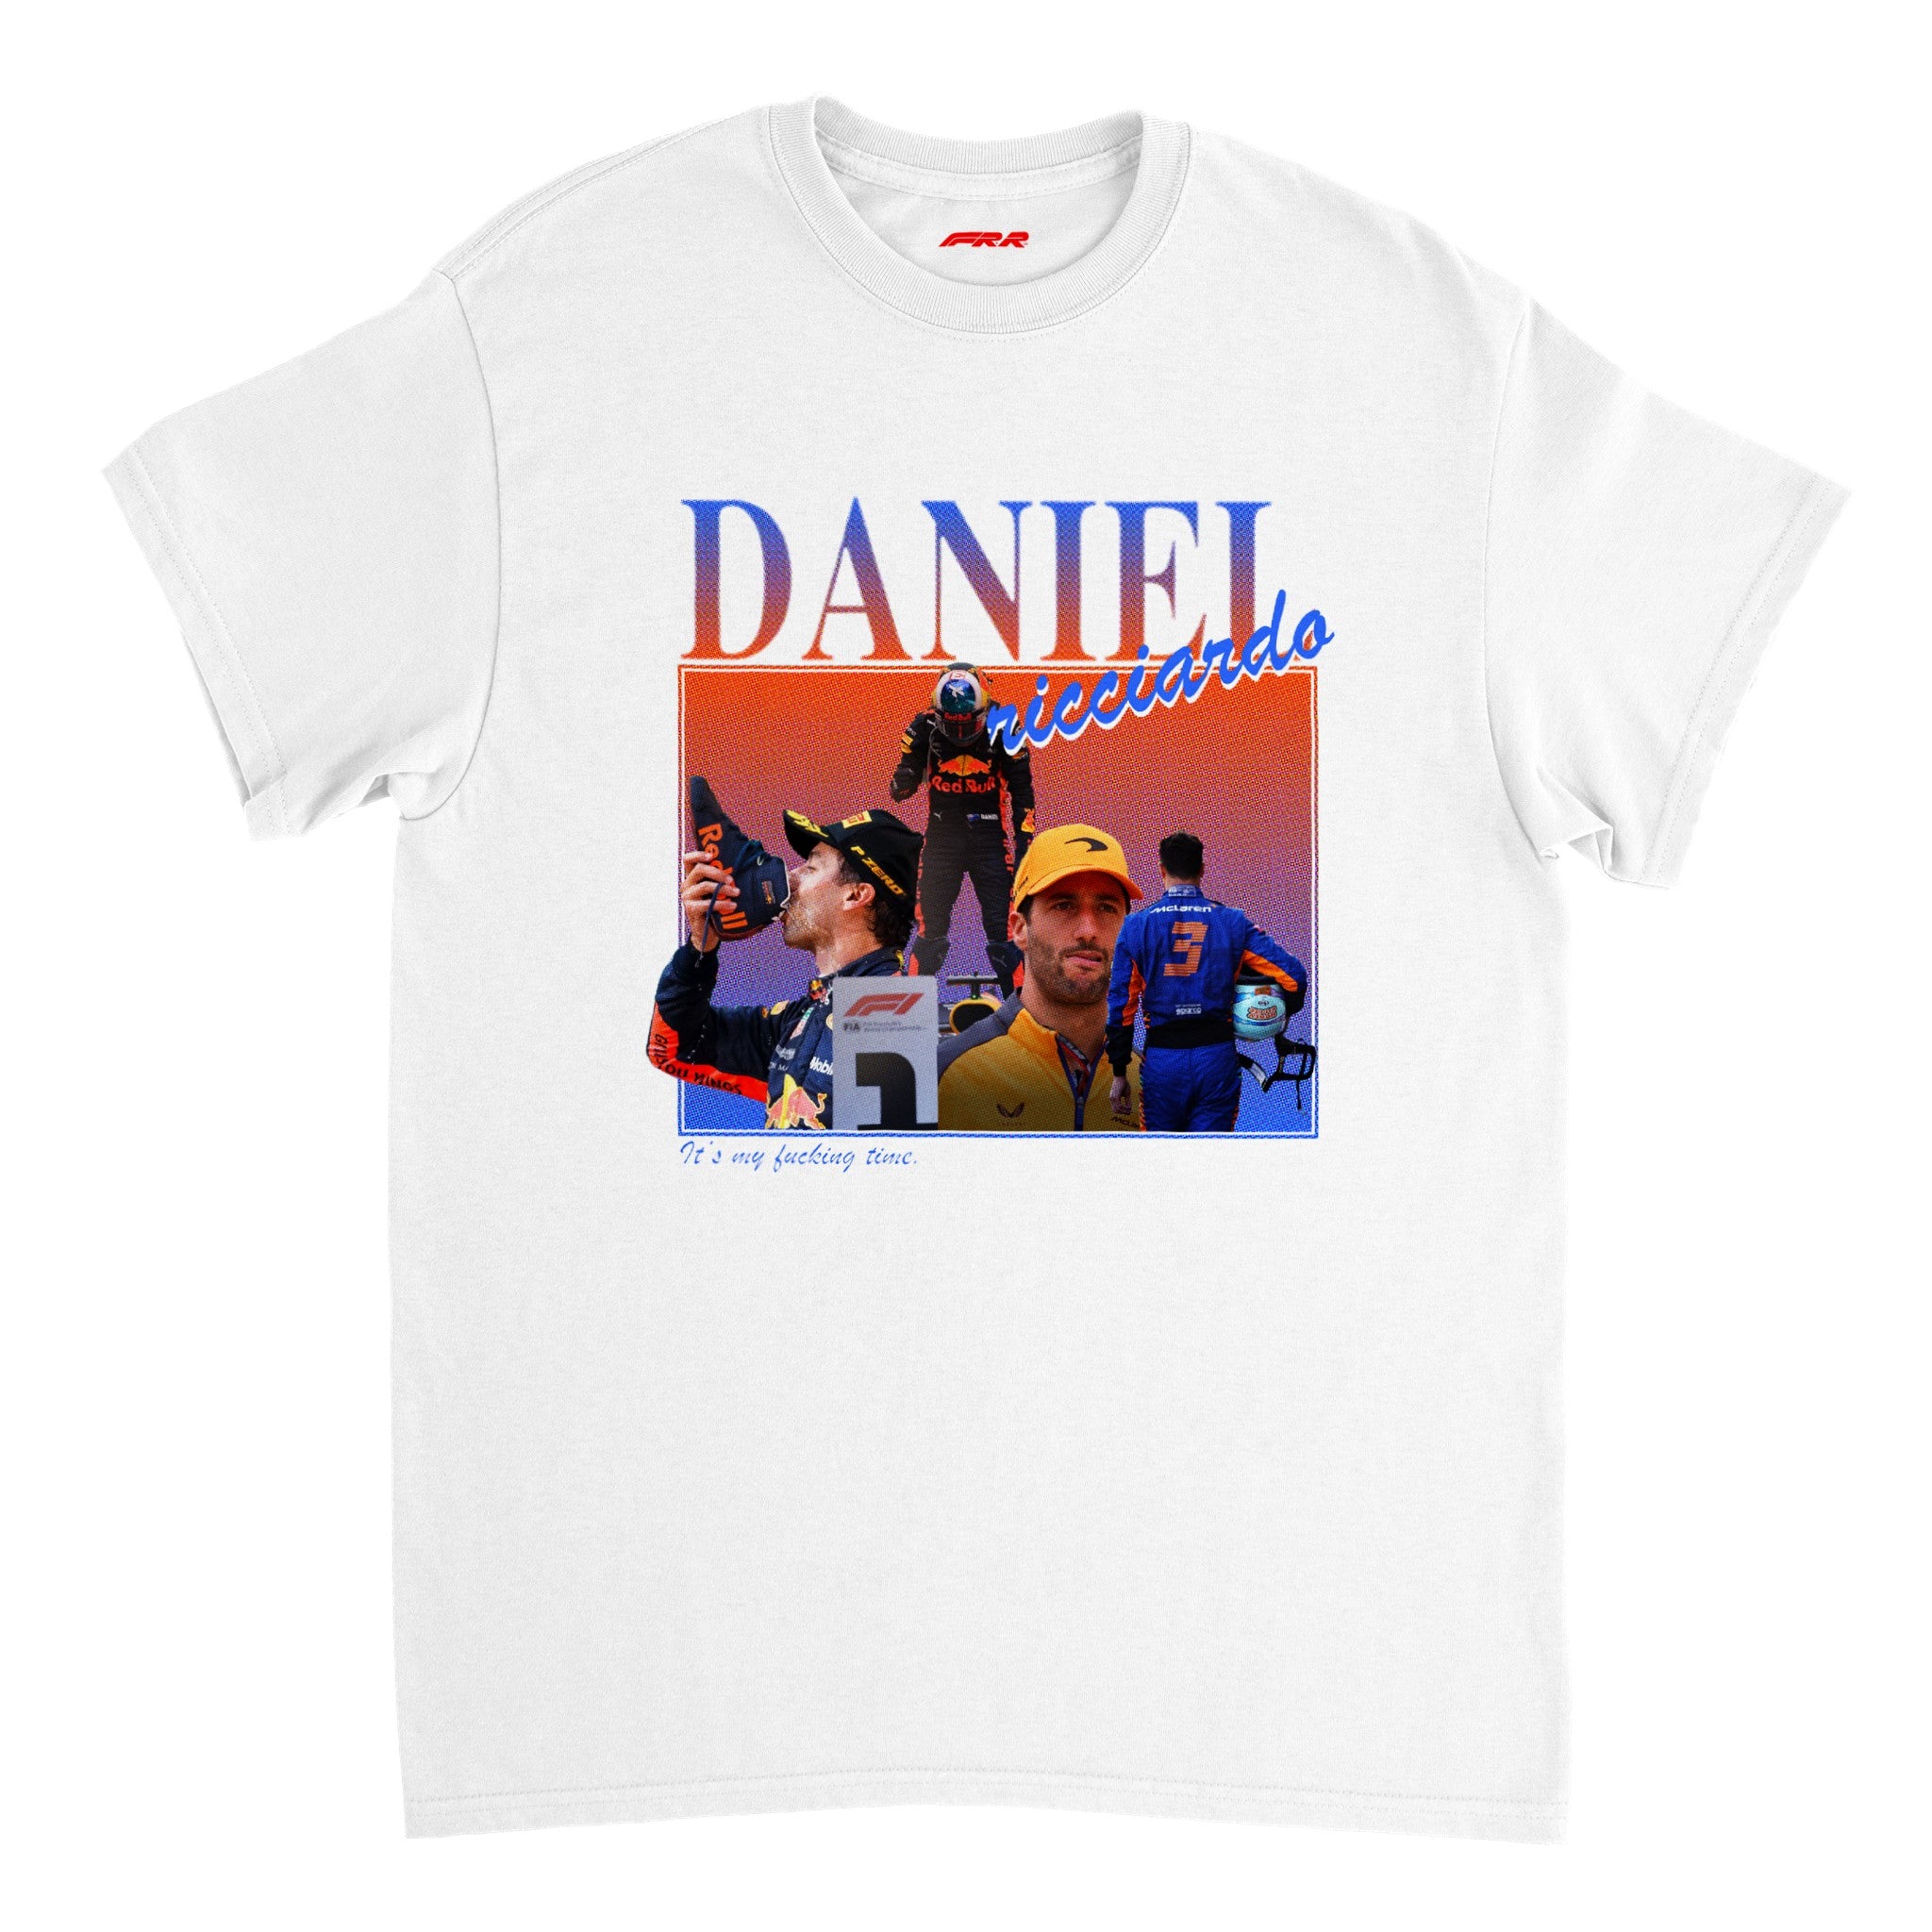 T-shirt - BRB Daniel - Formula Rerun 